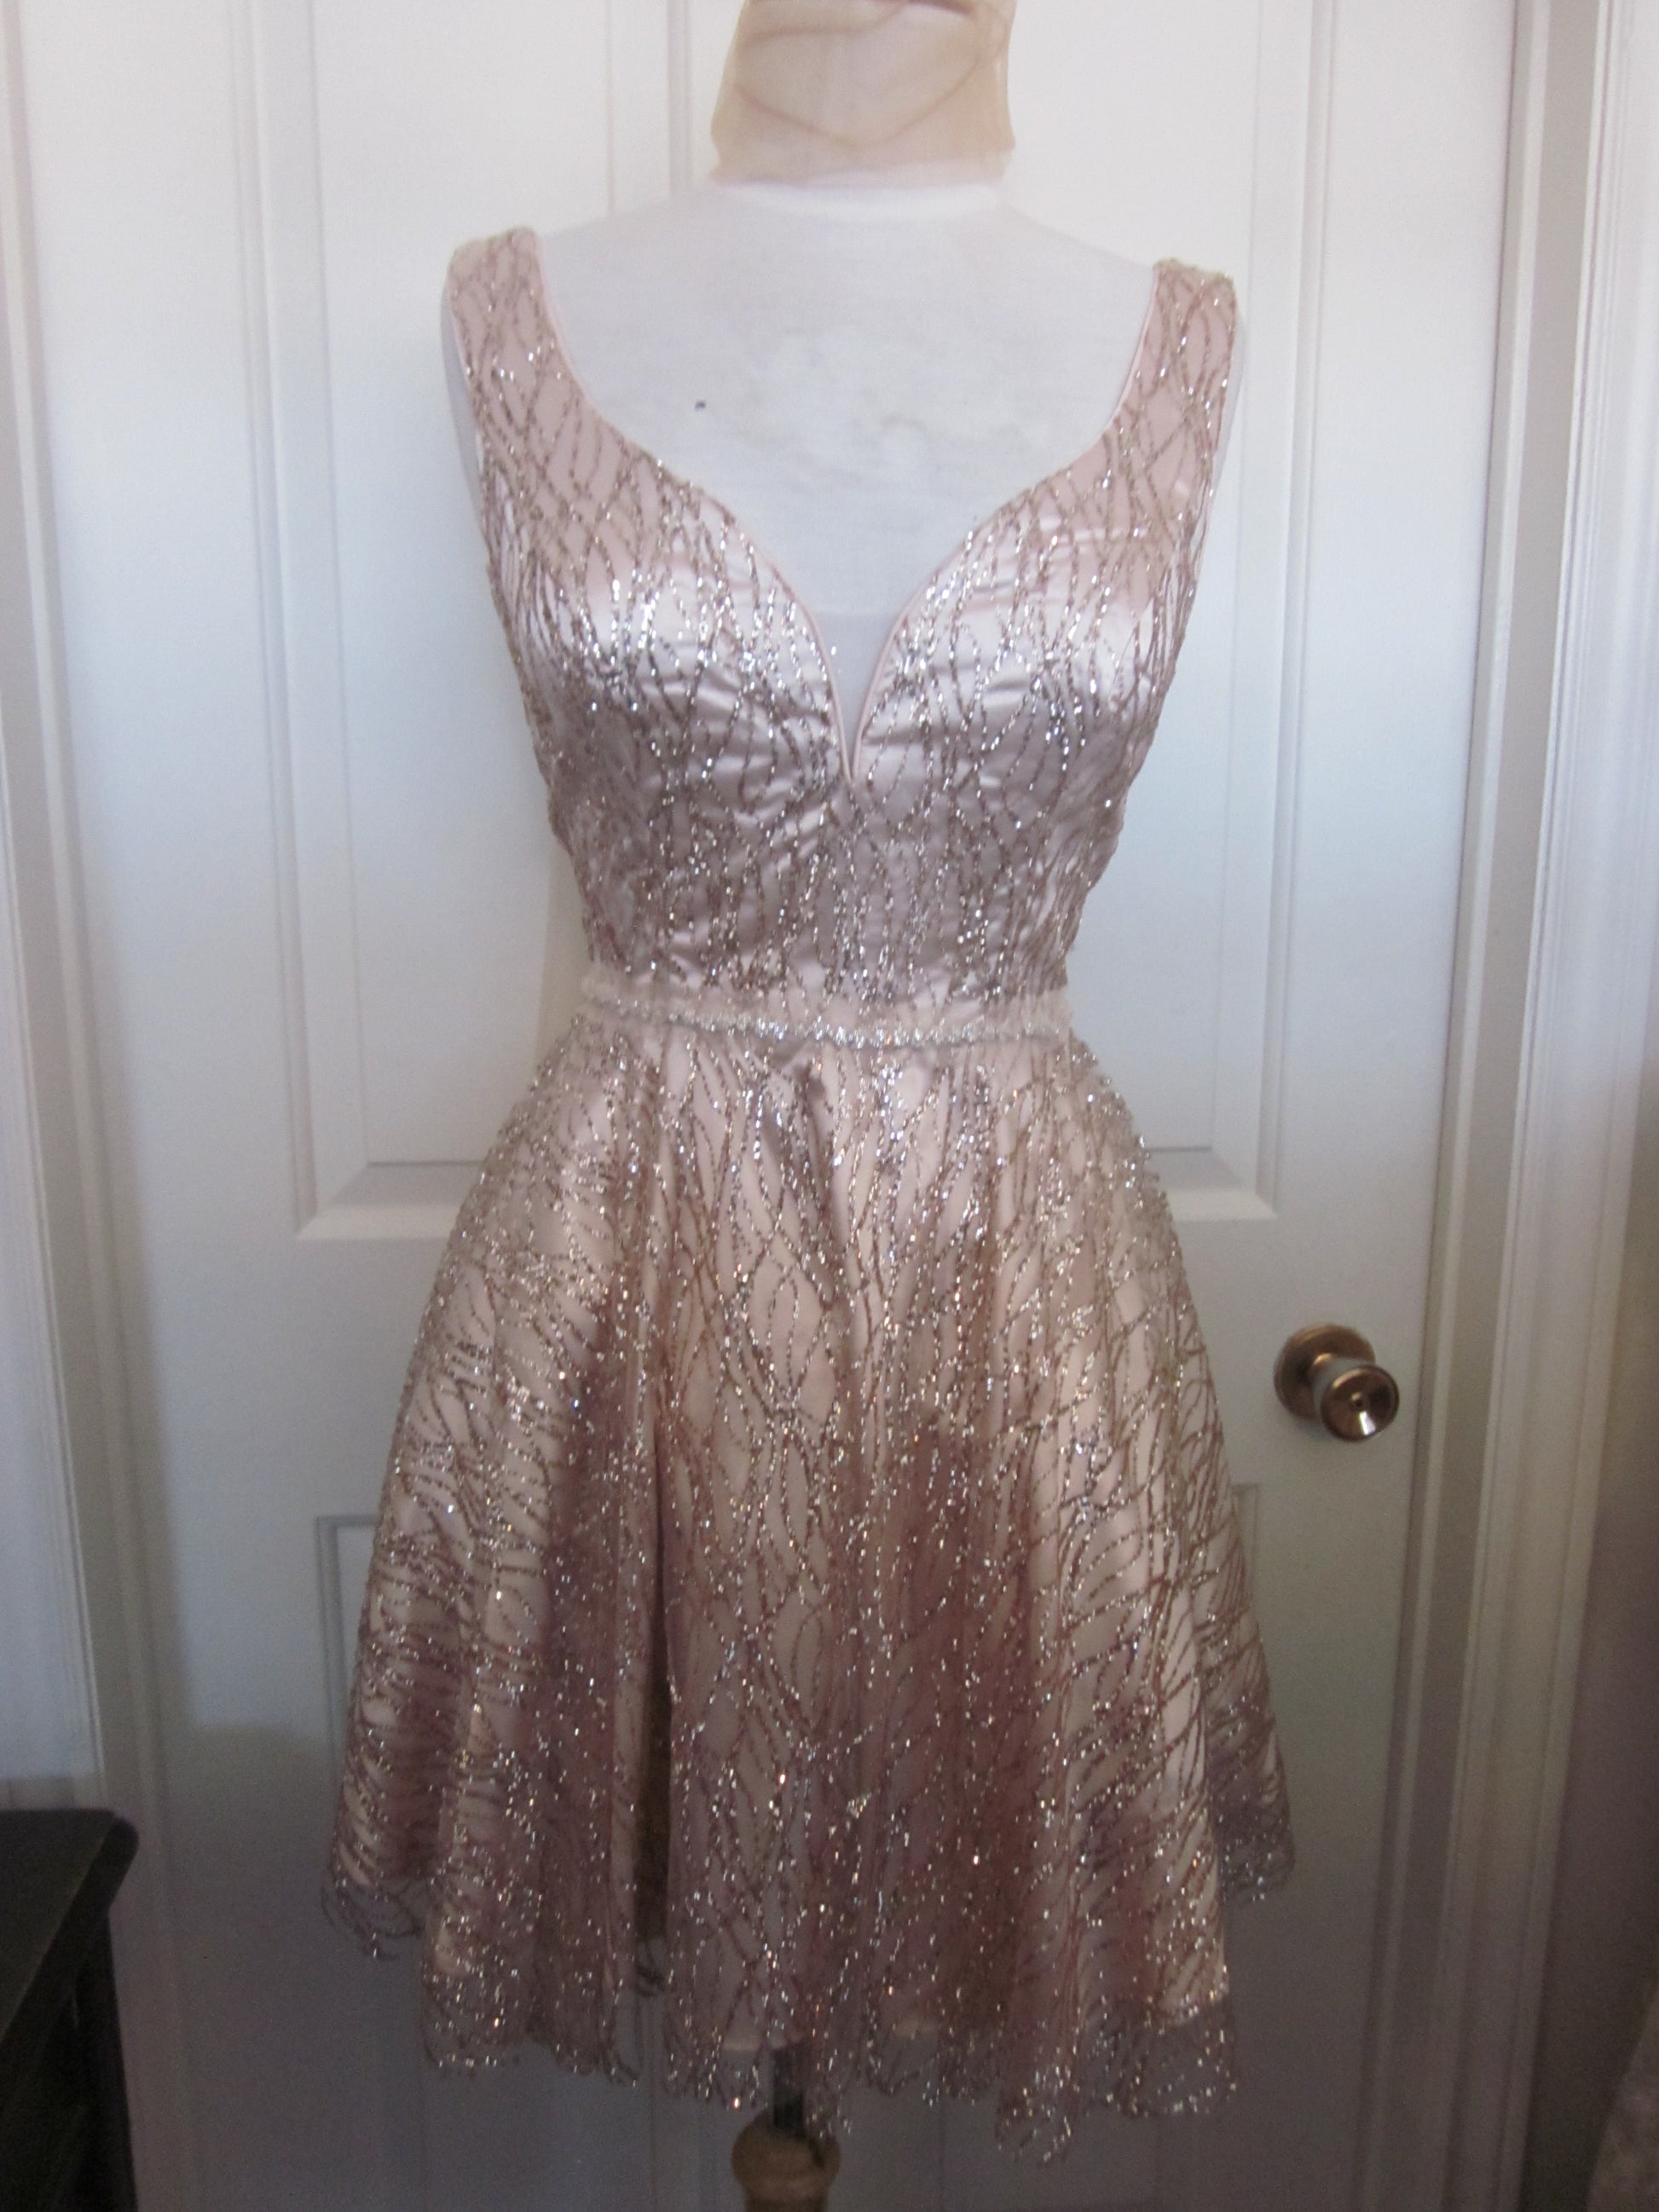 Pink Violet Short Dress Size M Style 3103 - MISS LESTER'S 